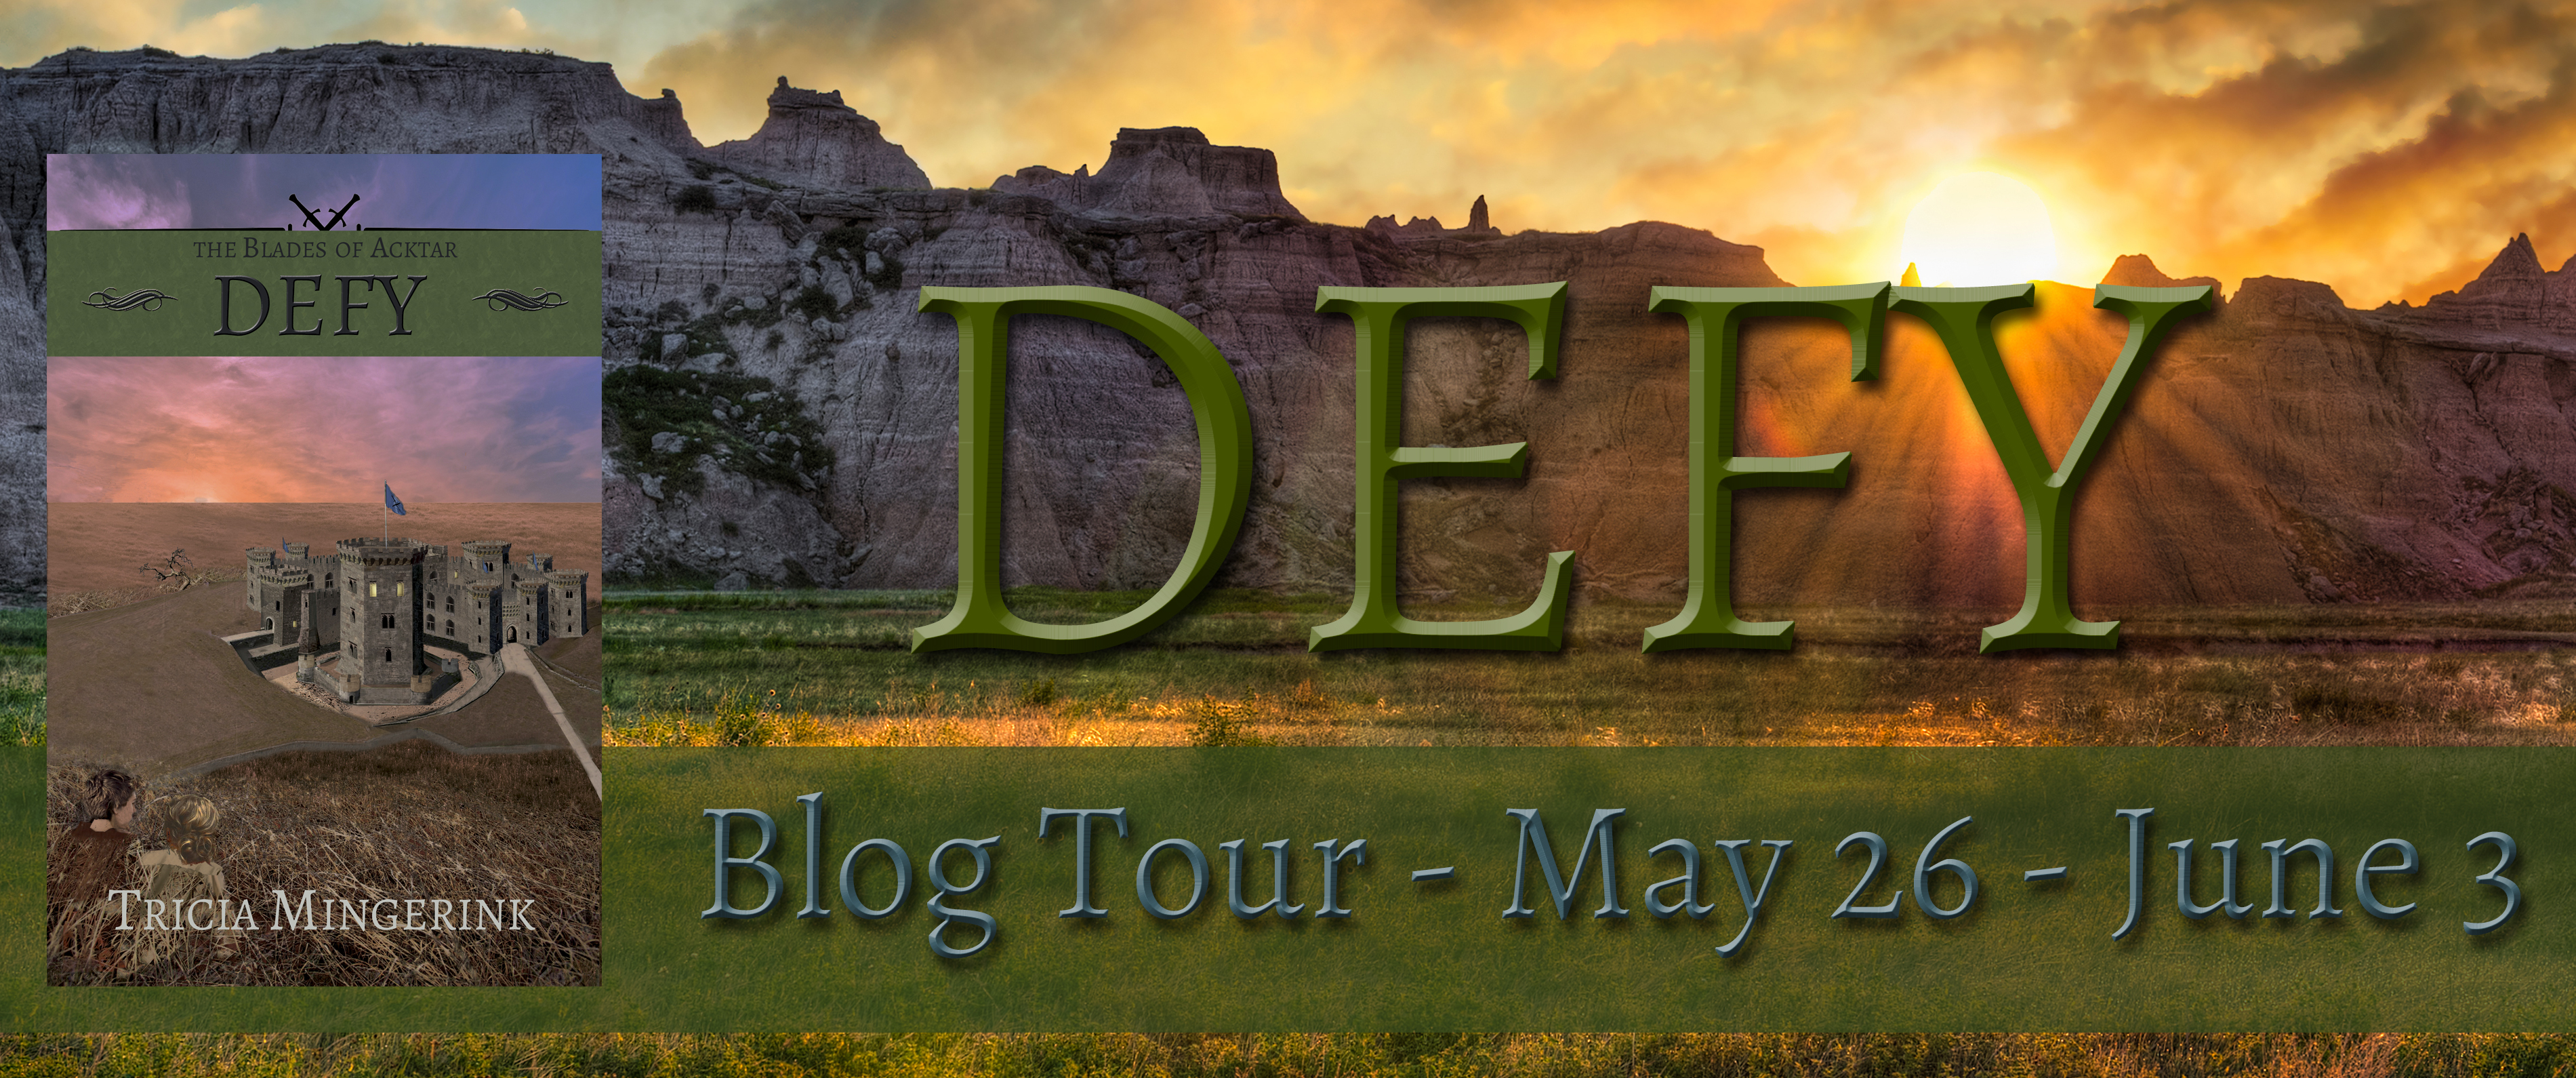 Defy Blog Tour Header